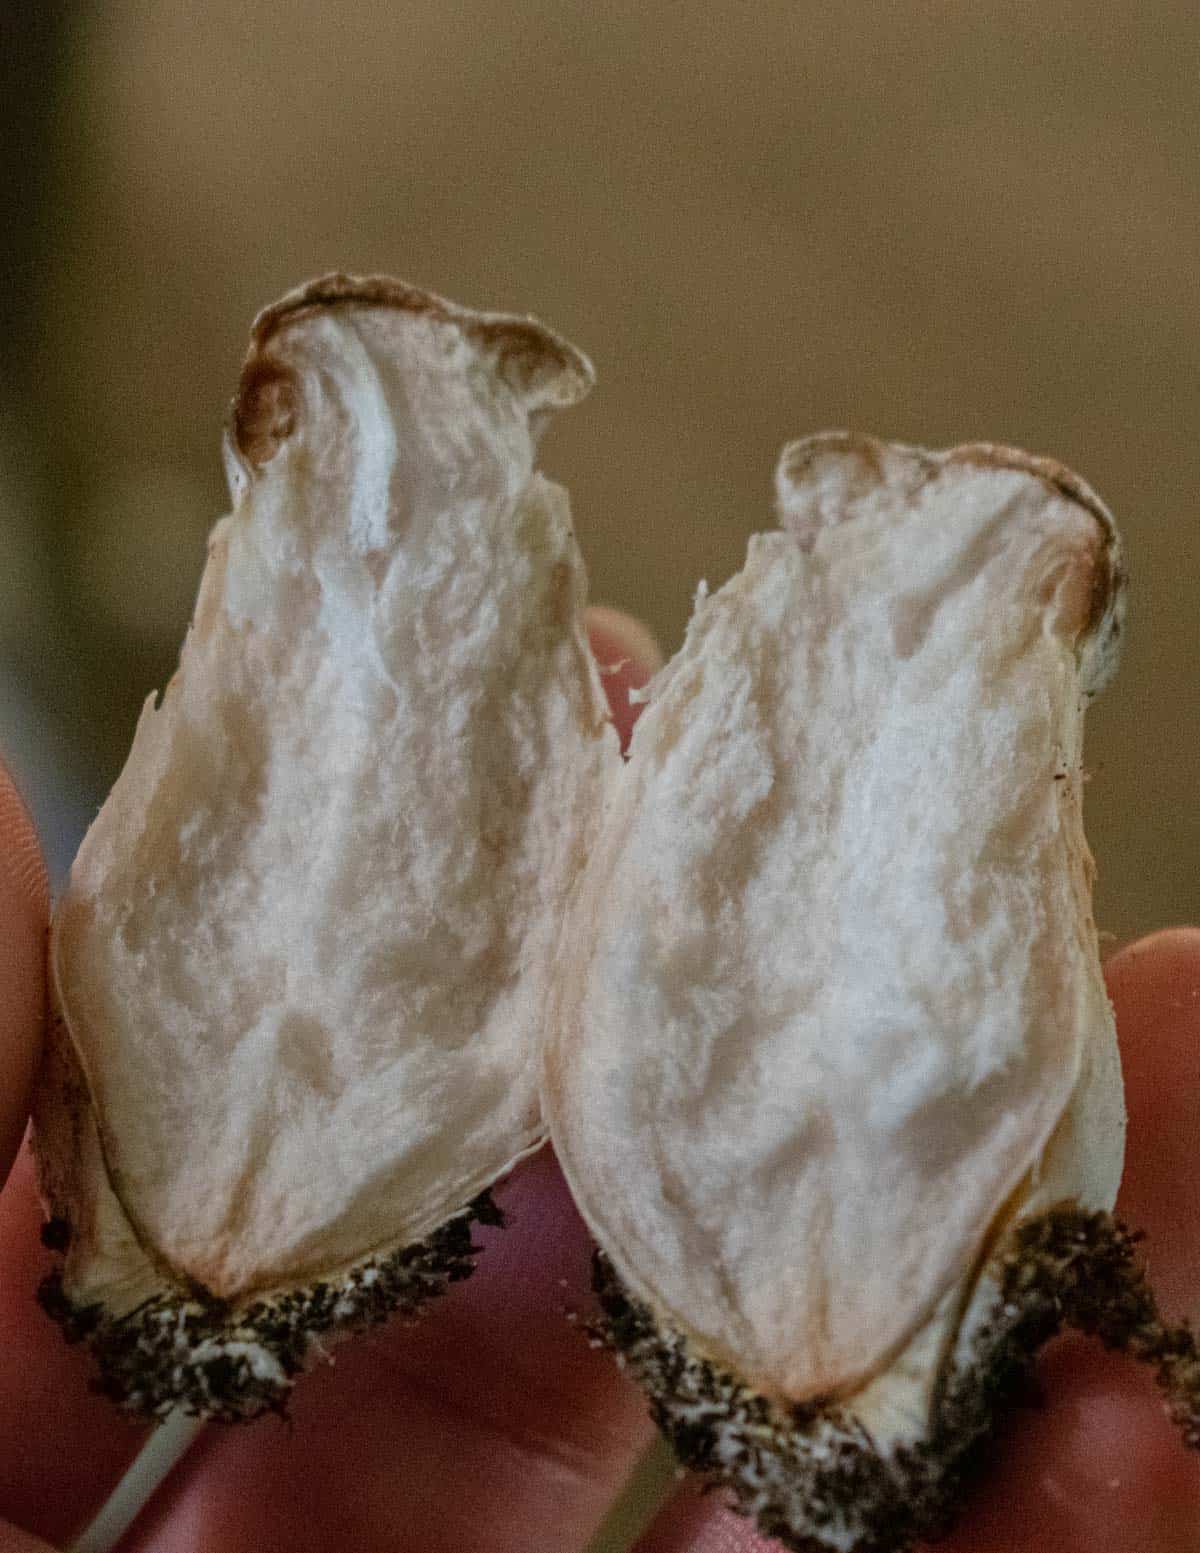 A half parisitized honey mushroom reacting with Entoloma abortivum cut in half. Image by Sarah Duhon. 